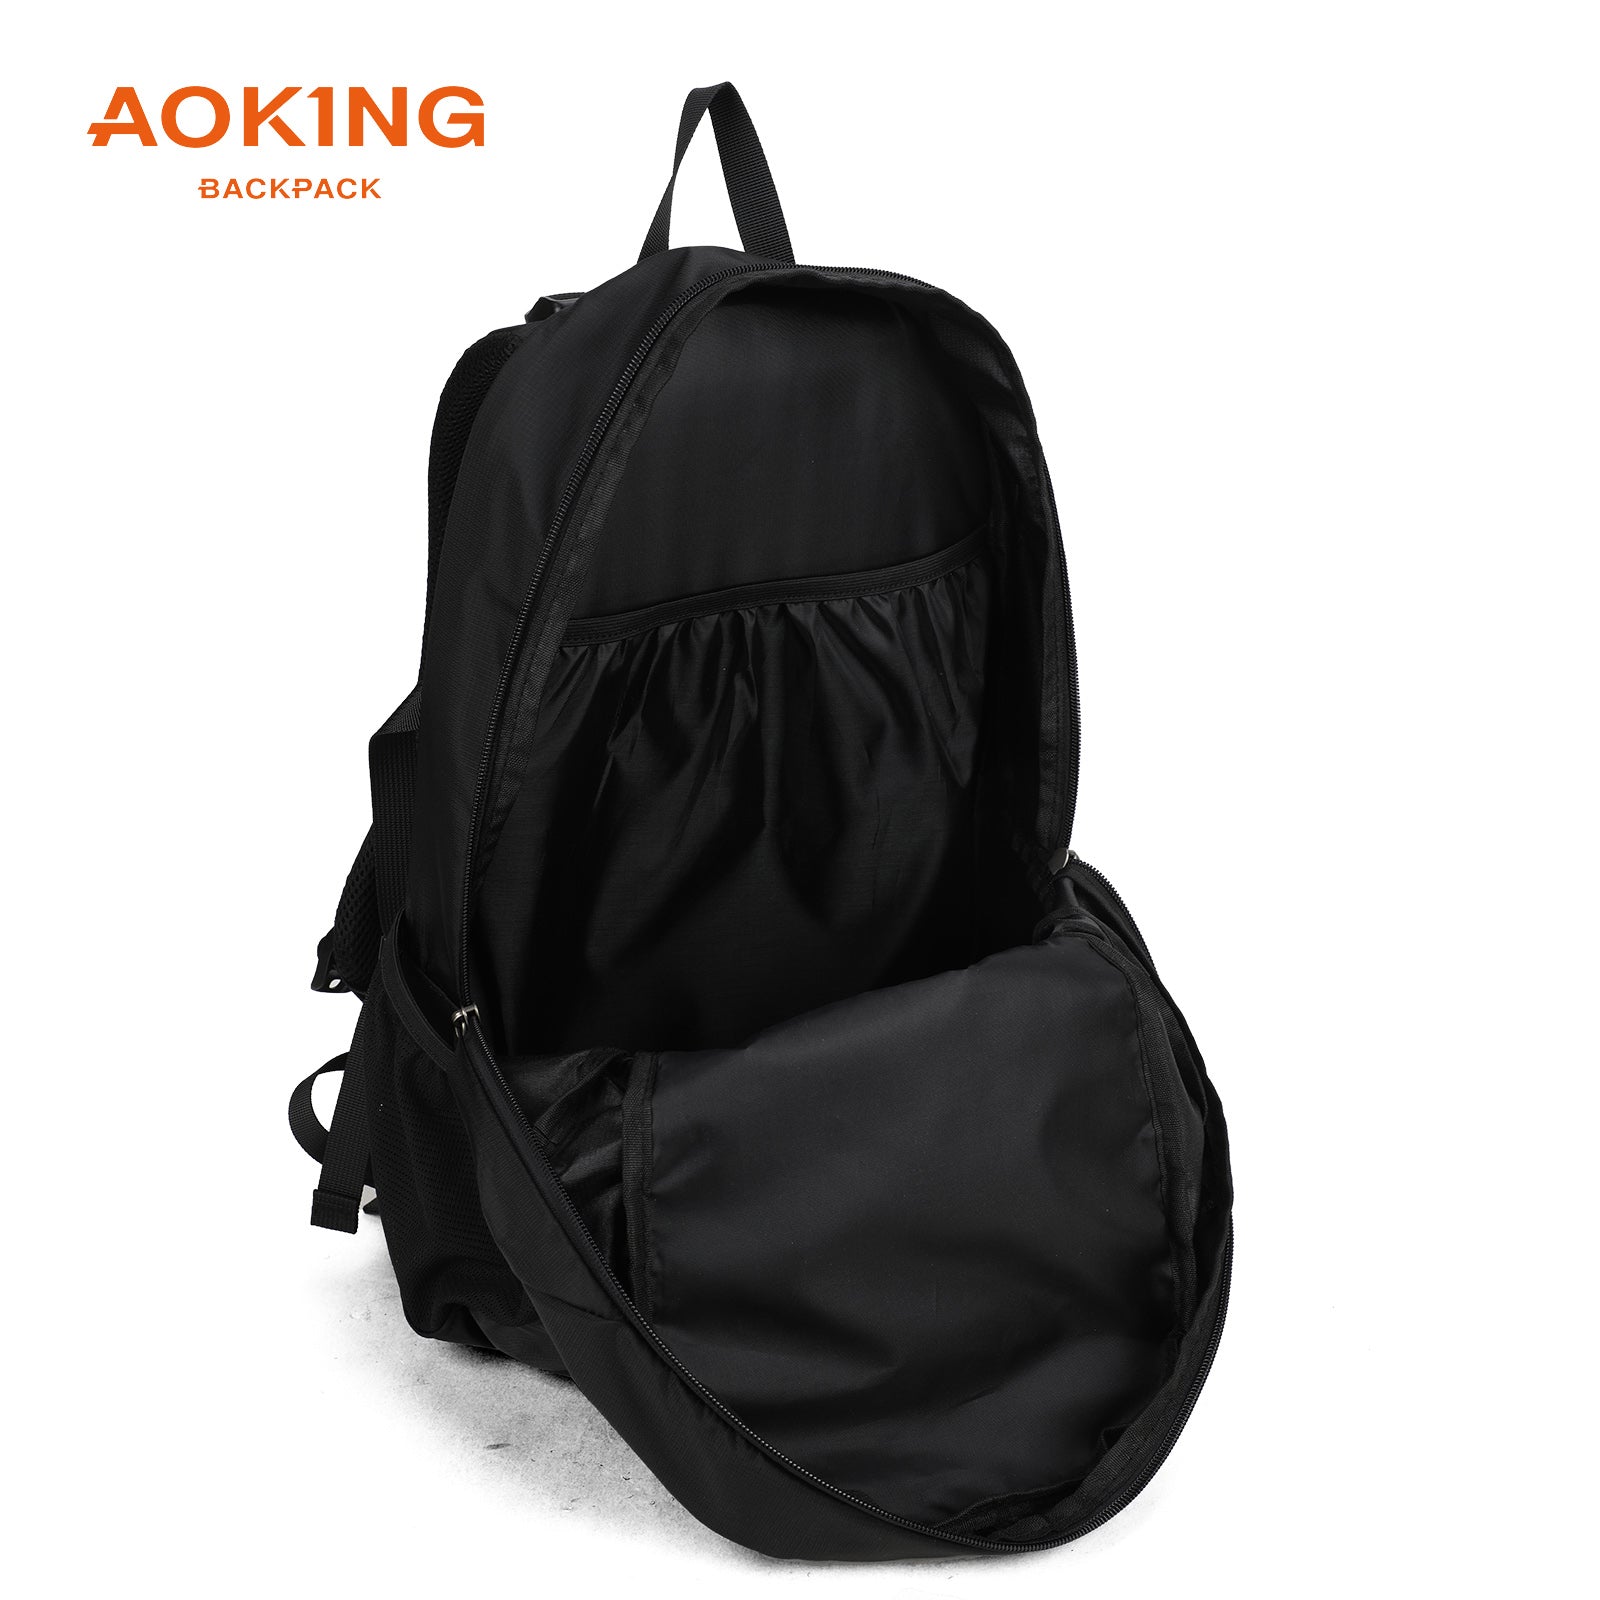 Aoking Backpack Large Capacity Casual Backpack Outdoor Bag JN79877